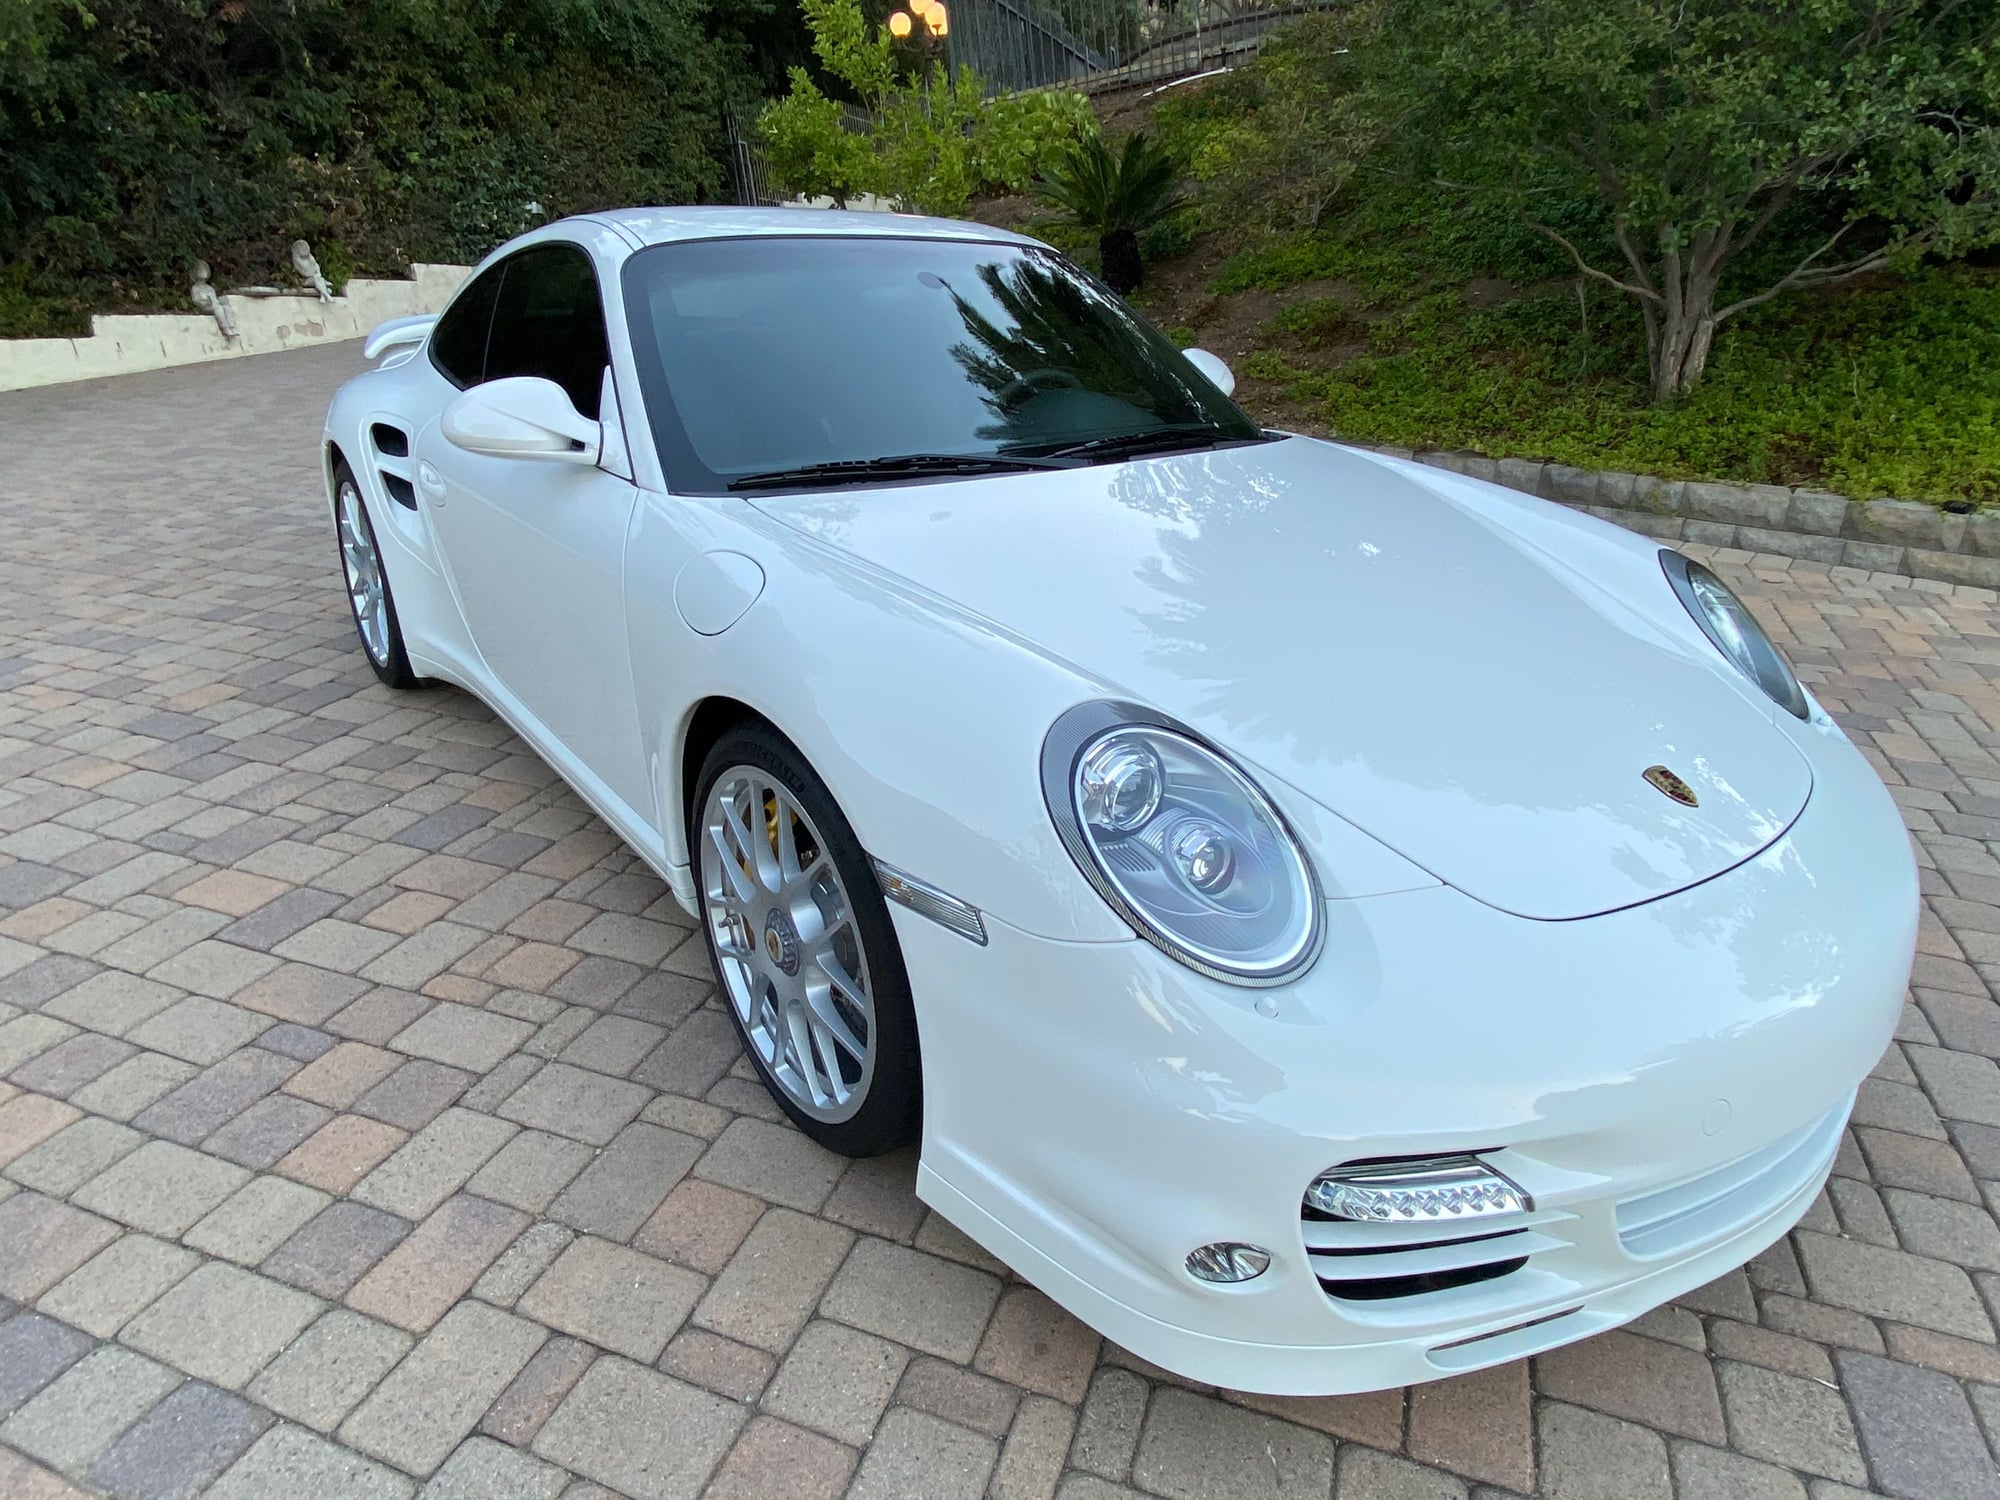 2012 Porsche 911 - 2012 Porsche 911 Turbo S - Used - VIN WP0AD2A93CS766282 - 30,225 Miles - 6 cyl - AWD - Automatic - Coupe - White - Pasadena, CA 91107, United States